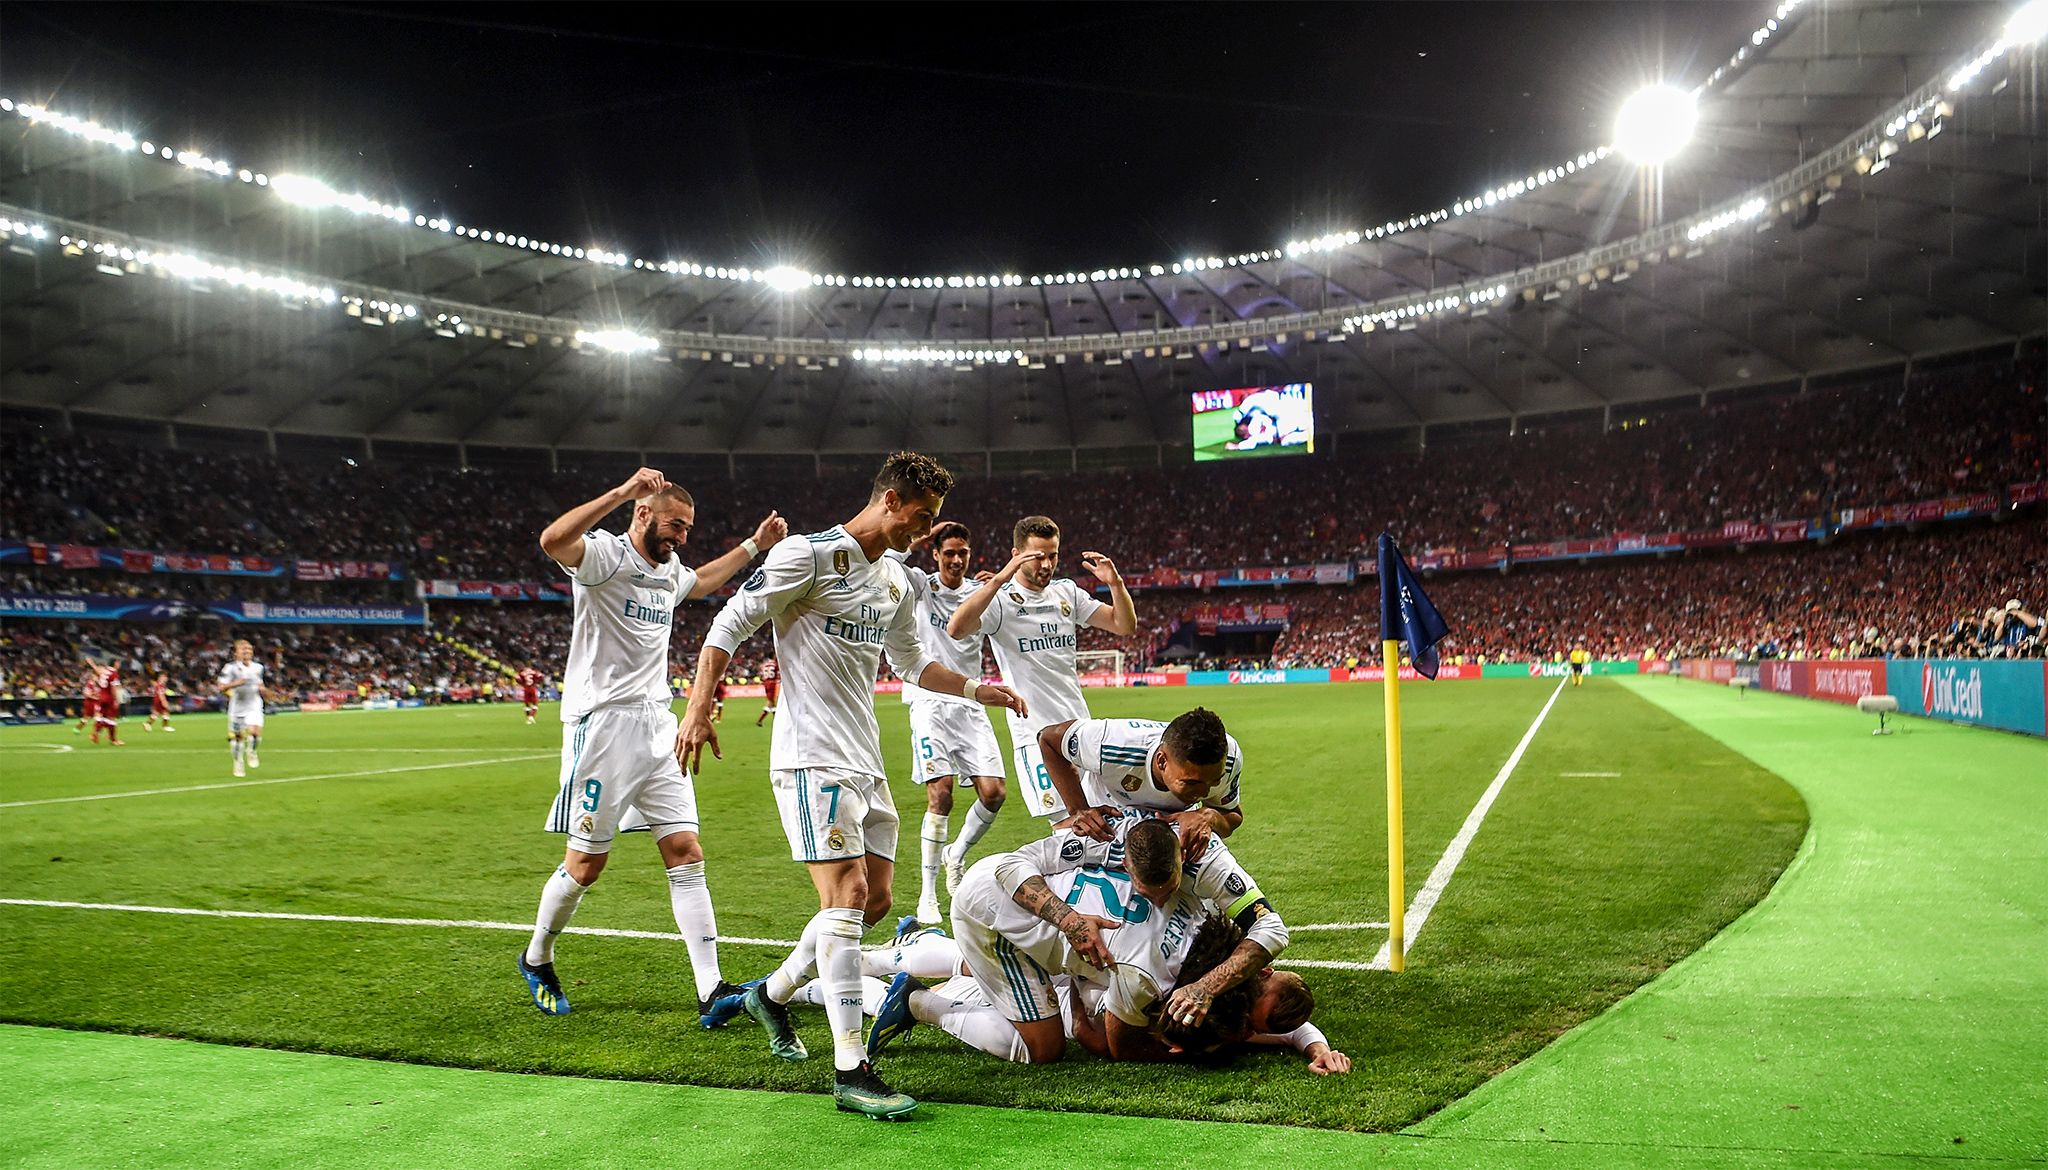 Gareth Bale brilliant bicycle kick wins the Champions League final - ESPN FC - ESPN FC2048 x 1170